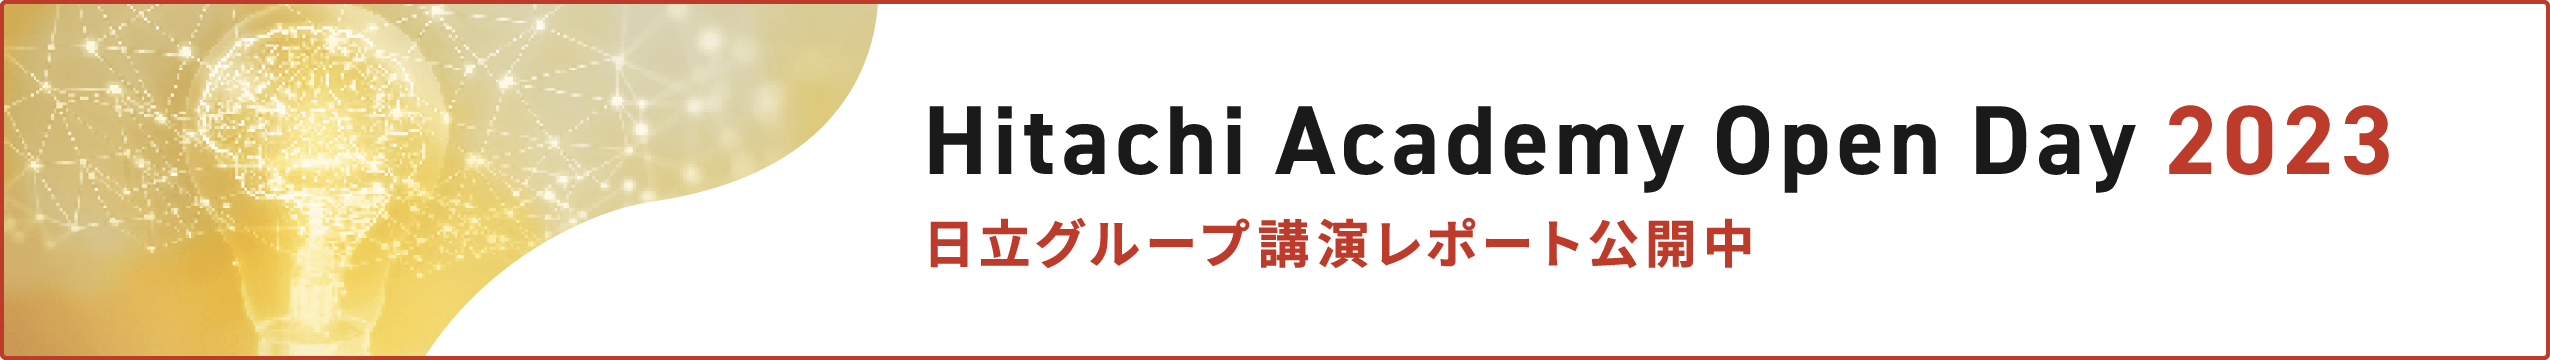 Hitachi Academy Open Day 2023 日立グループ講演レポート公開中